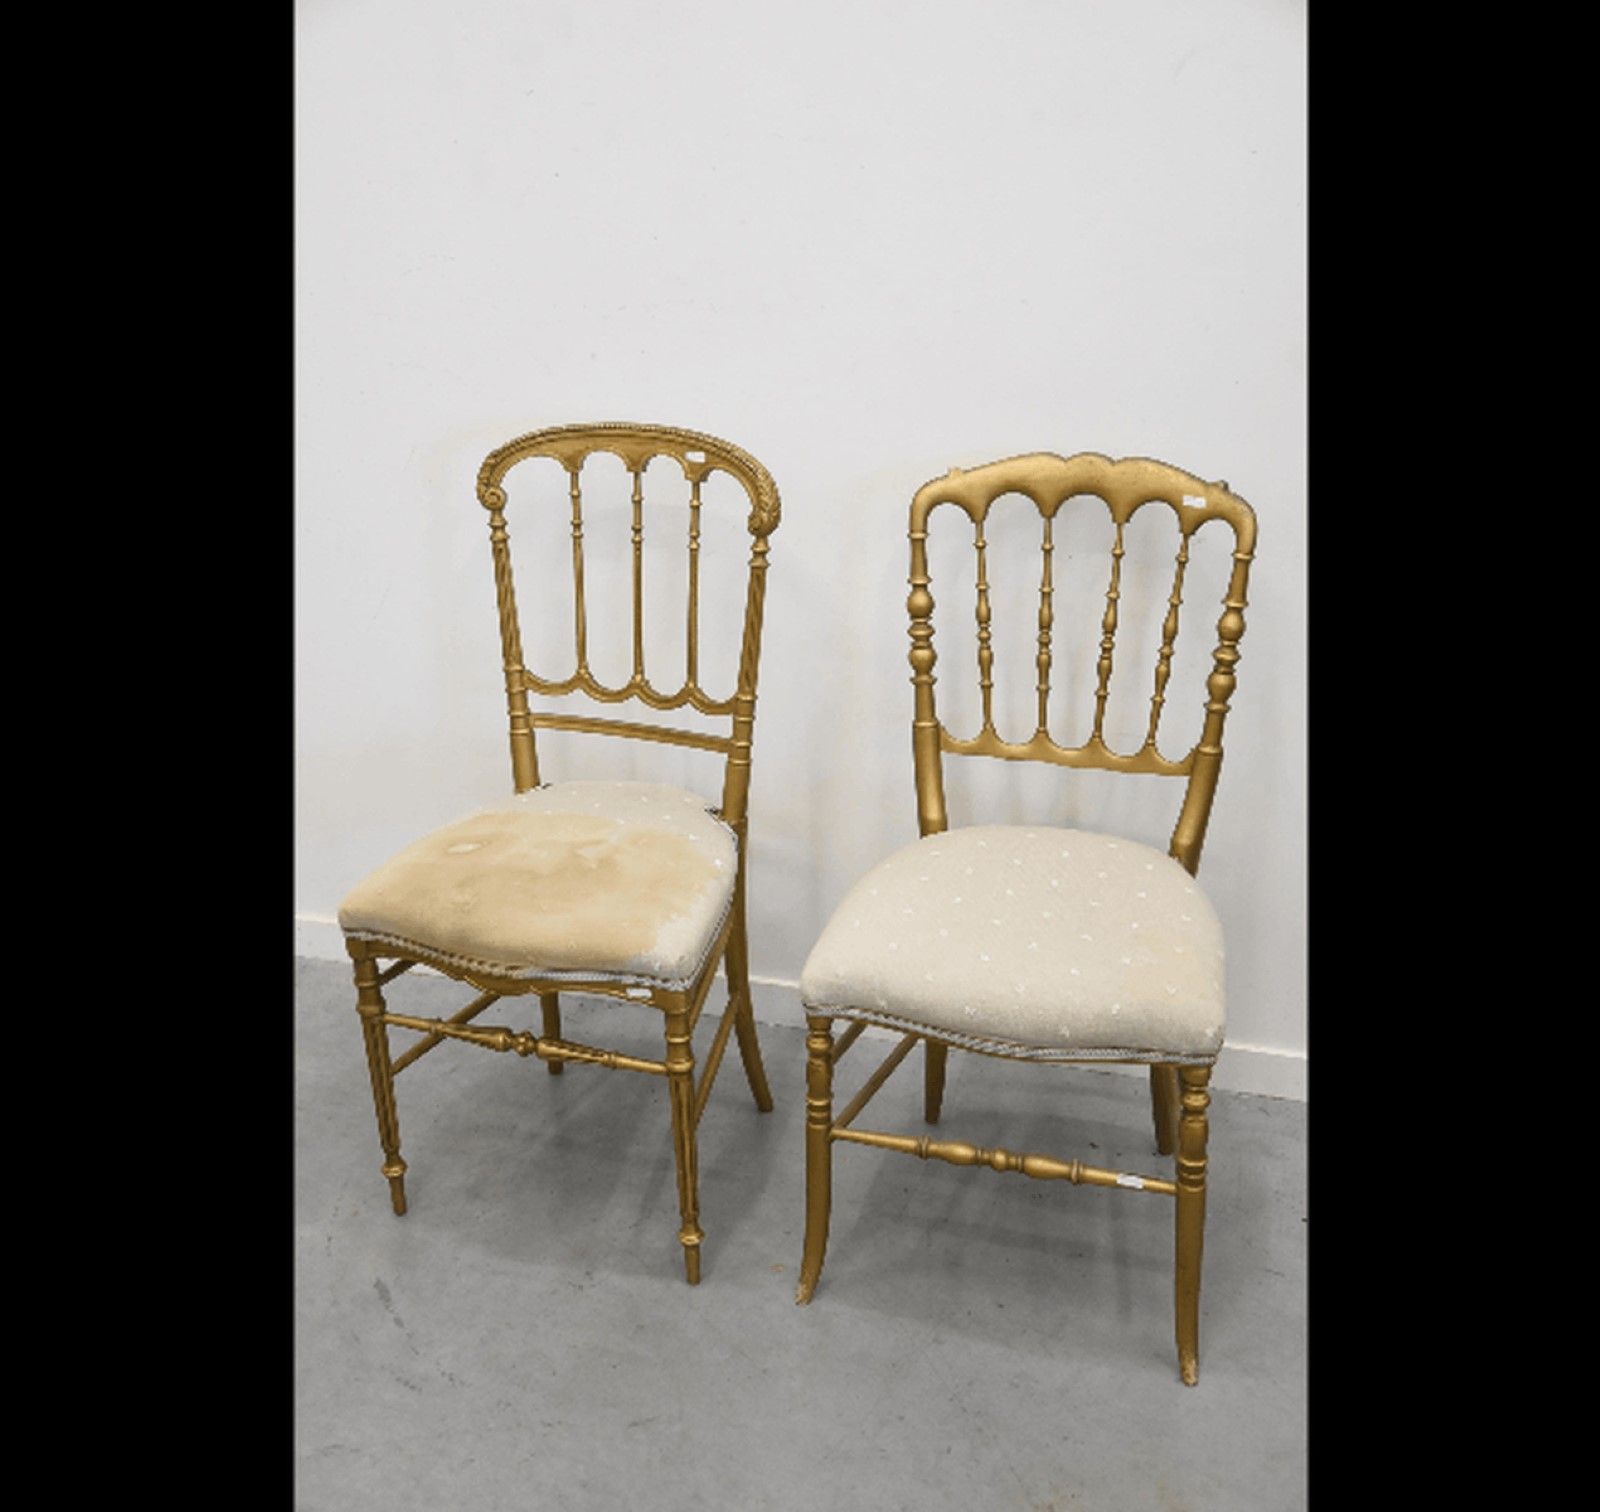 Null Dos sillones diferentes, pintados en oro, alrededor de 1900, juntos